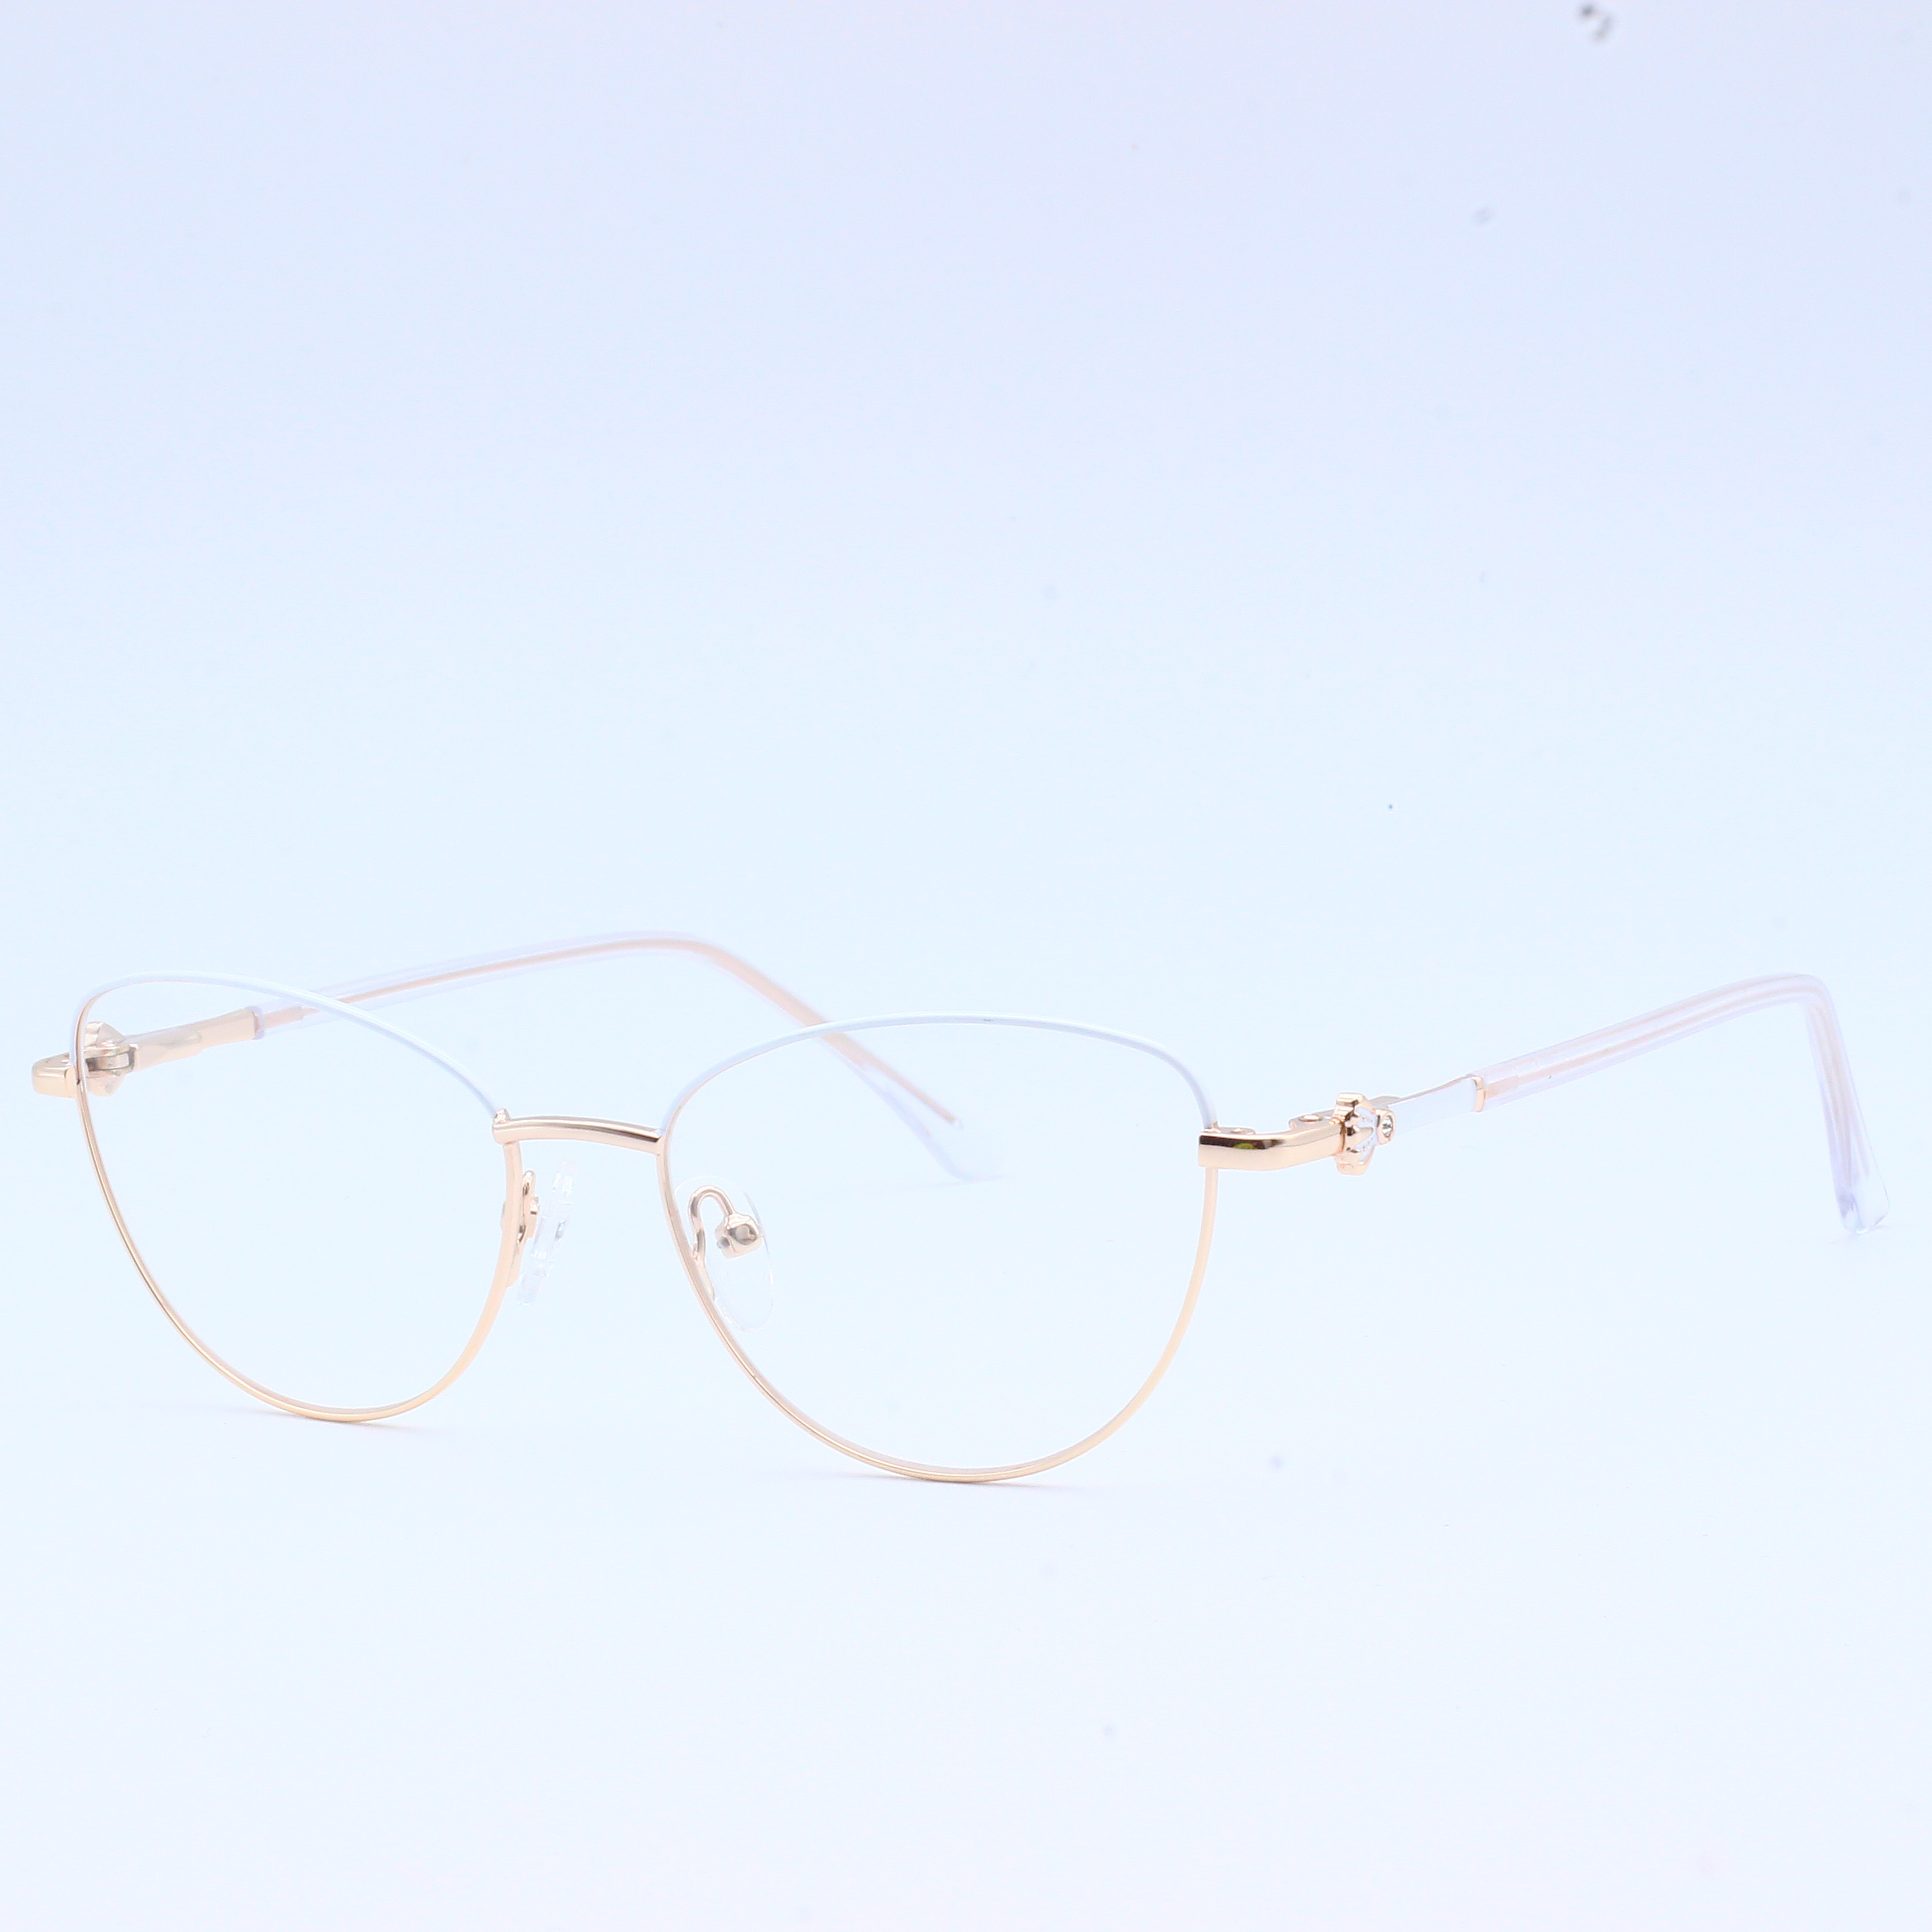 Metal Spring Hinge Cat Eye Glasses Frames (6)